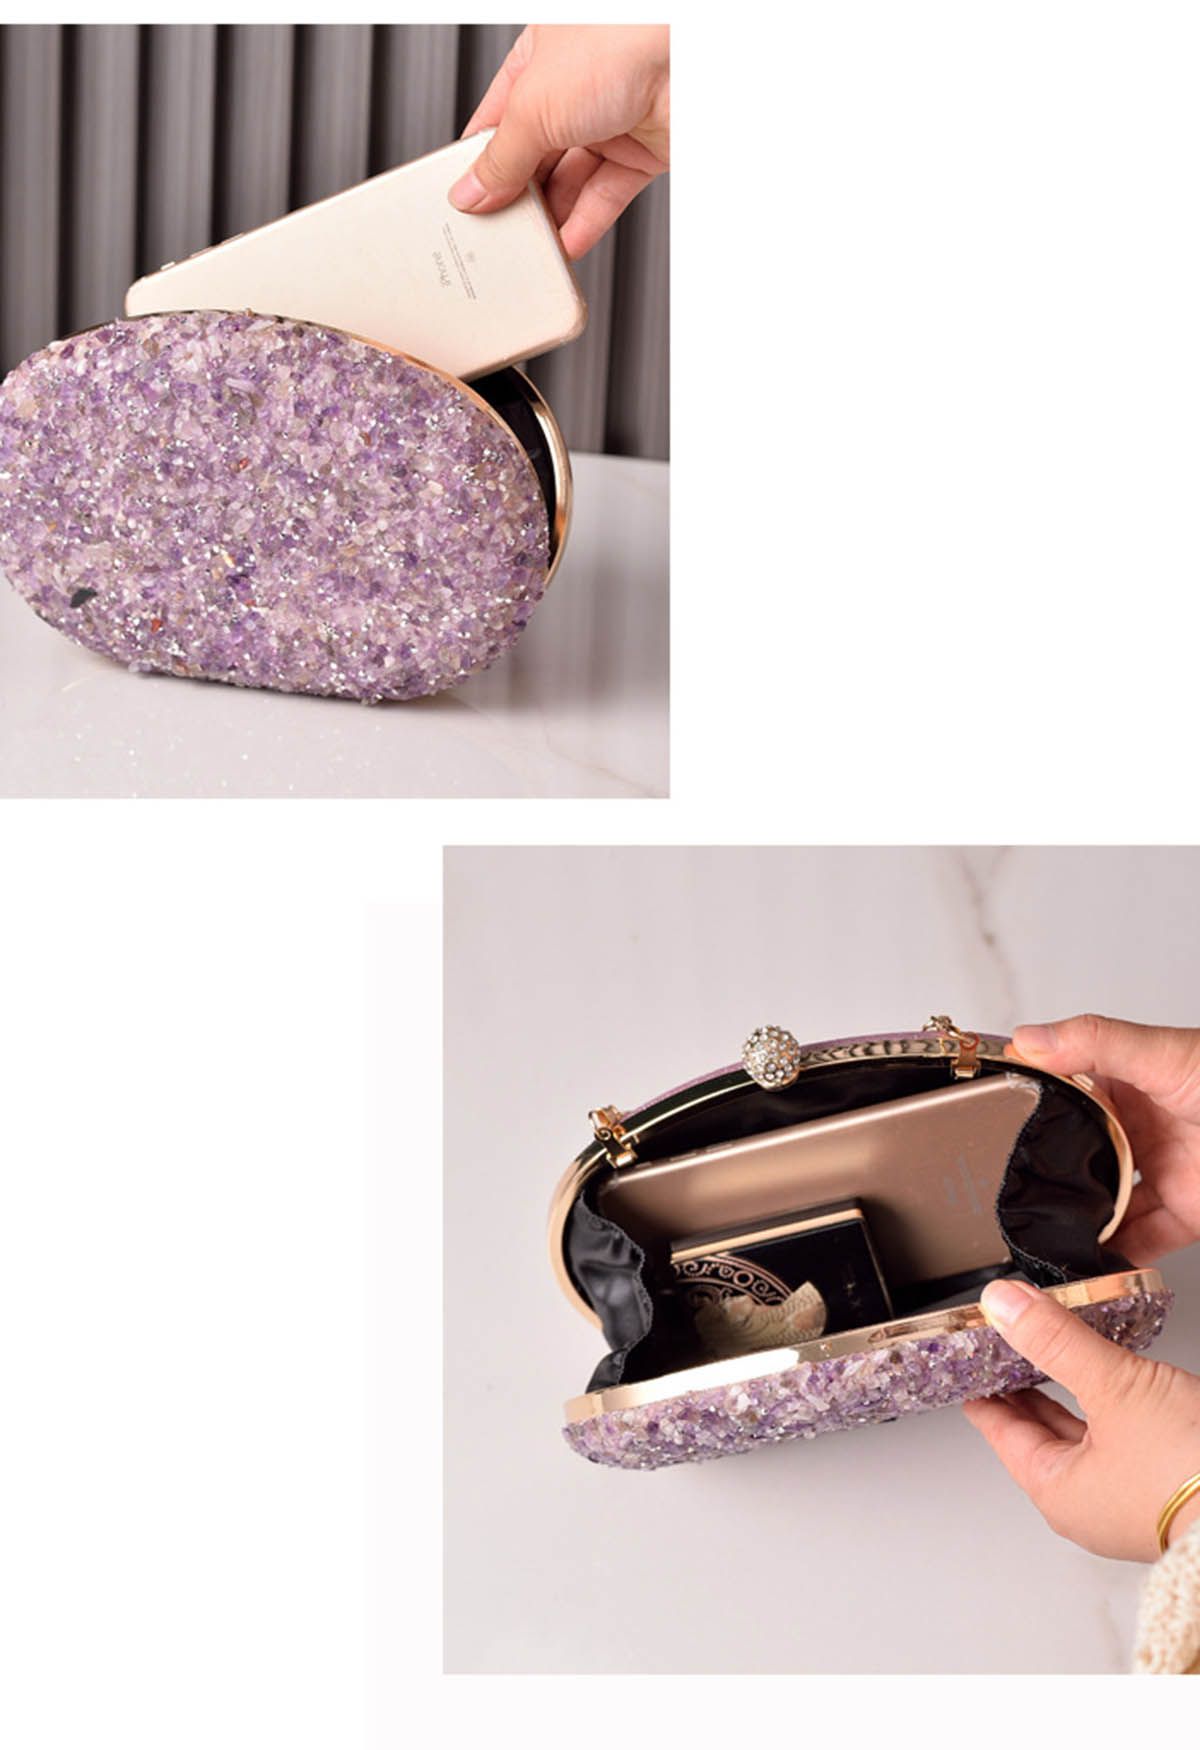 Pochette ovale pleine de perles et strass en violet